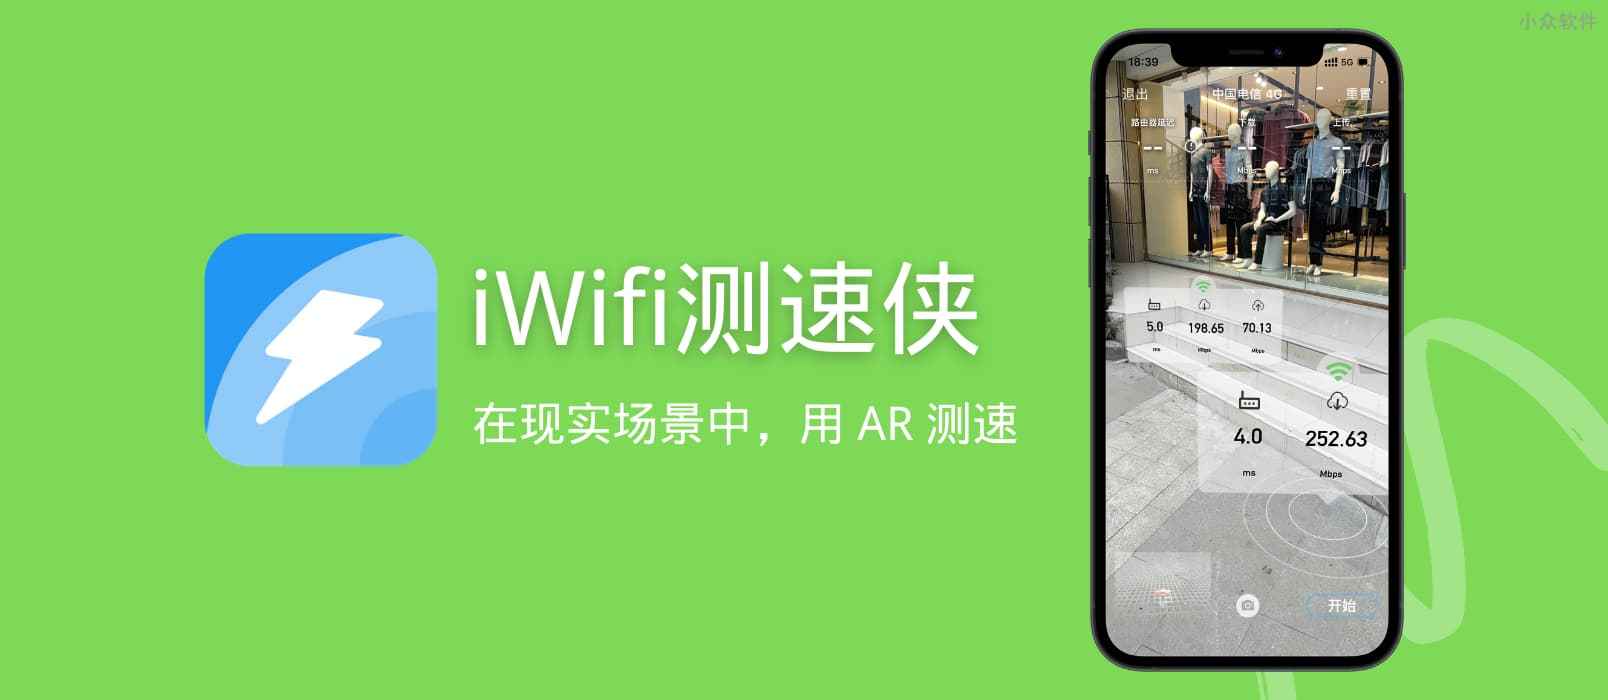 iWifi 测速侠 - 在现实场景中，用 AR 测速[macOS/iOS 限免]